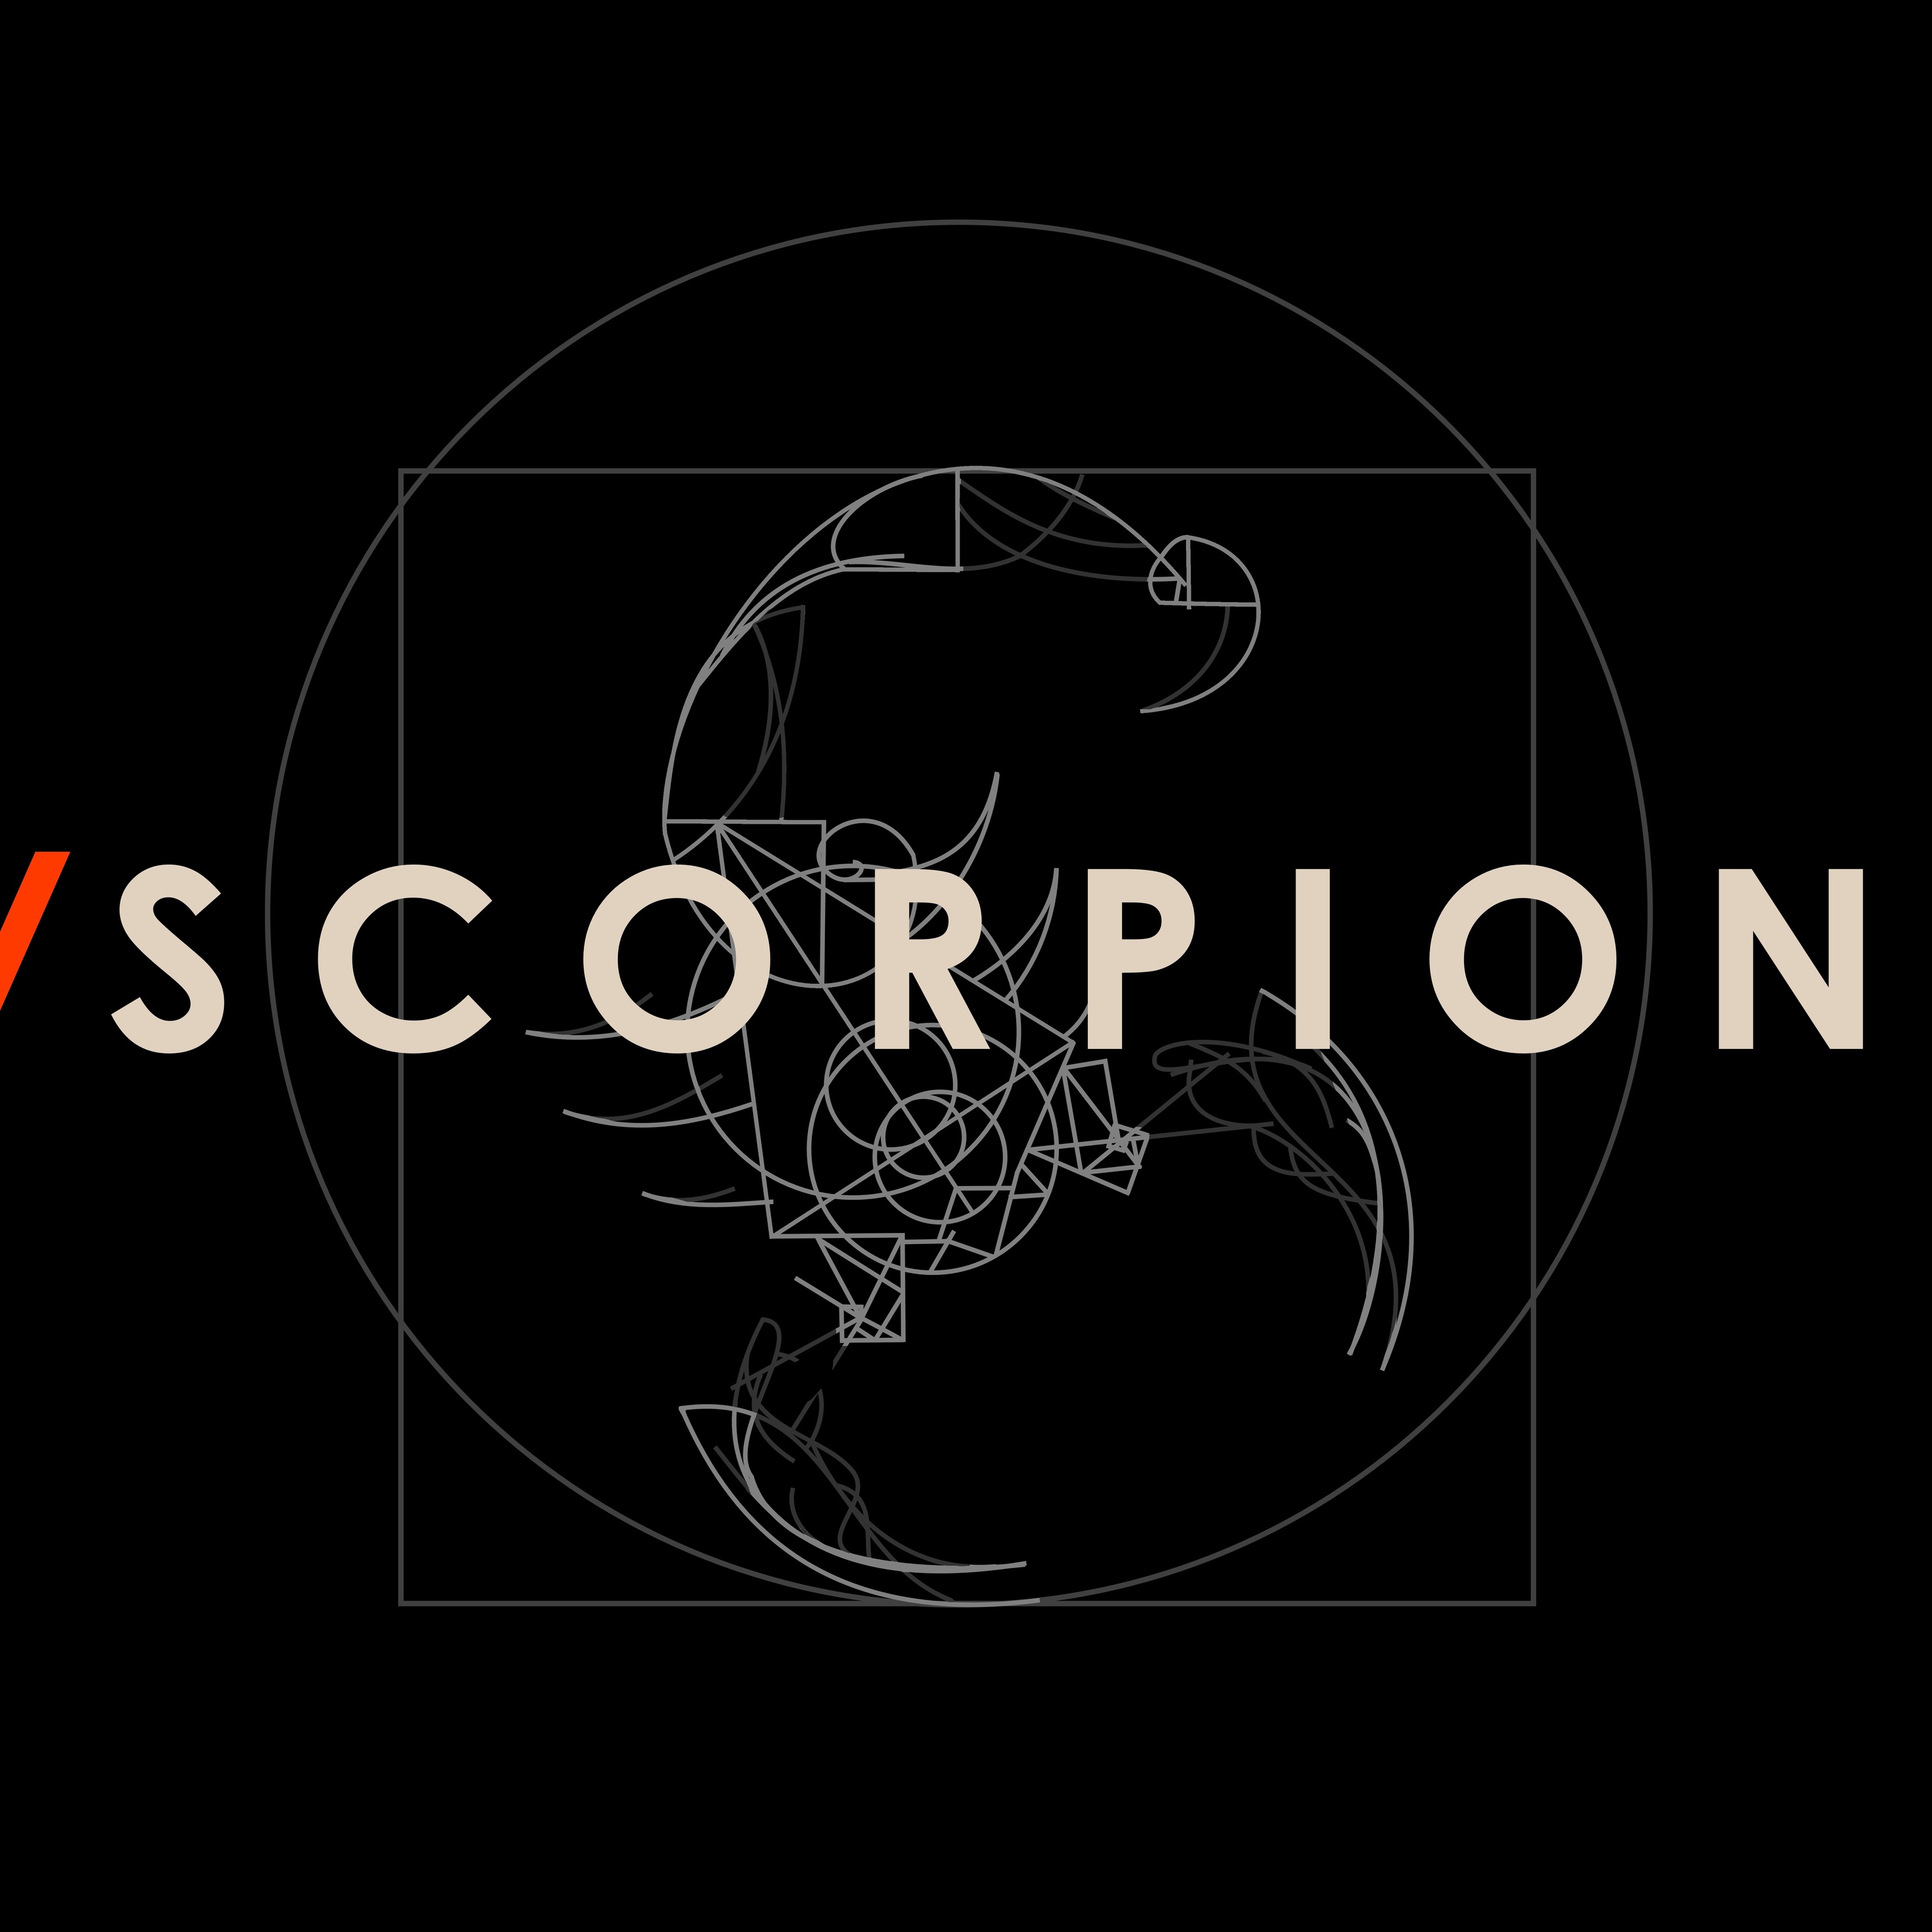 Scorpion Tv Show Logo iPad Pro Retina Display HD 4k Wallpaper, Image, Background, Photo and Picture